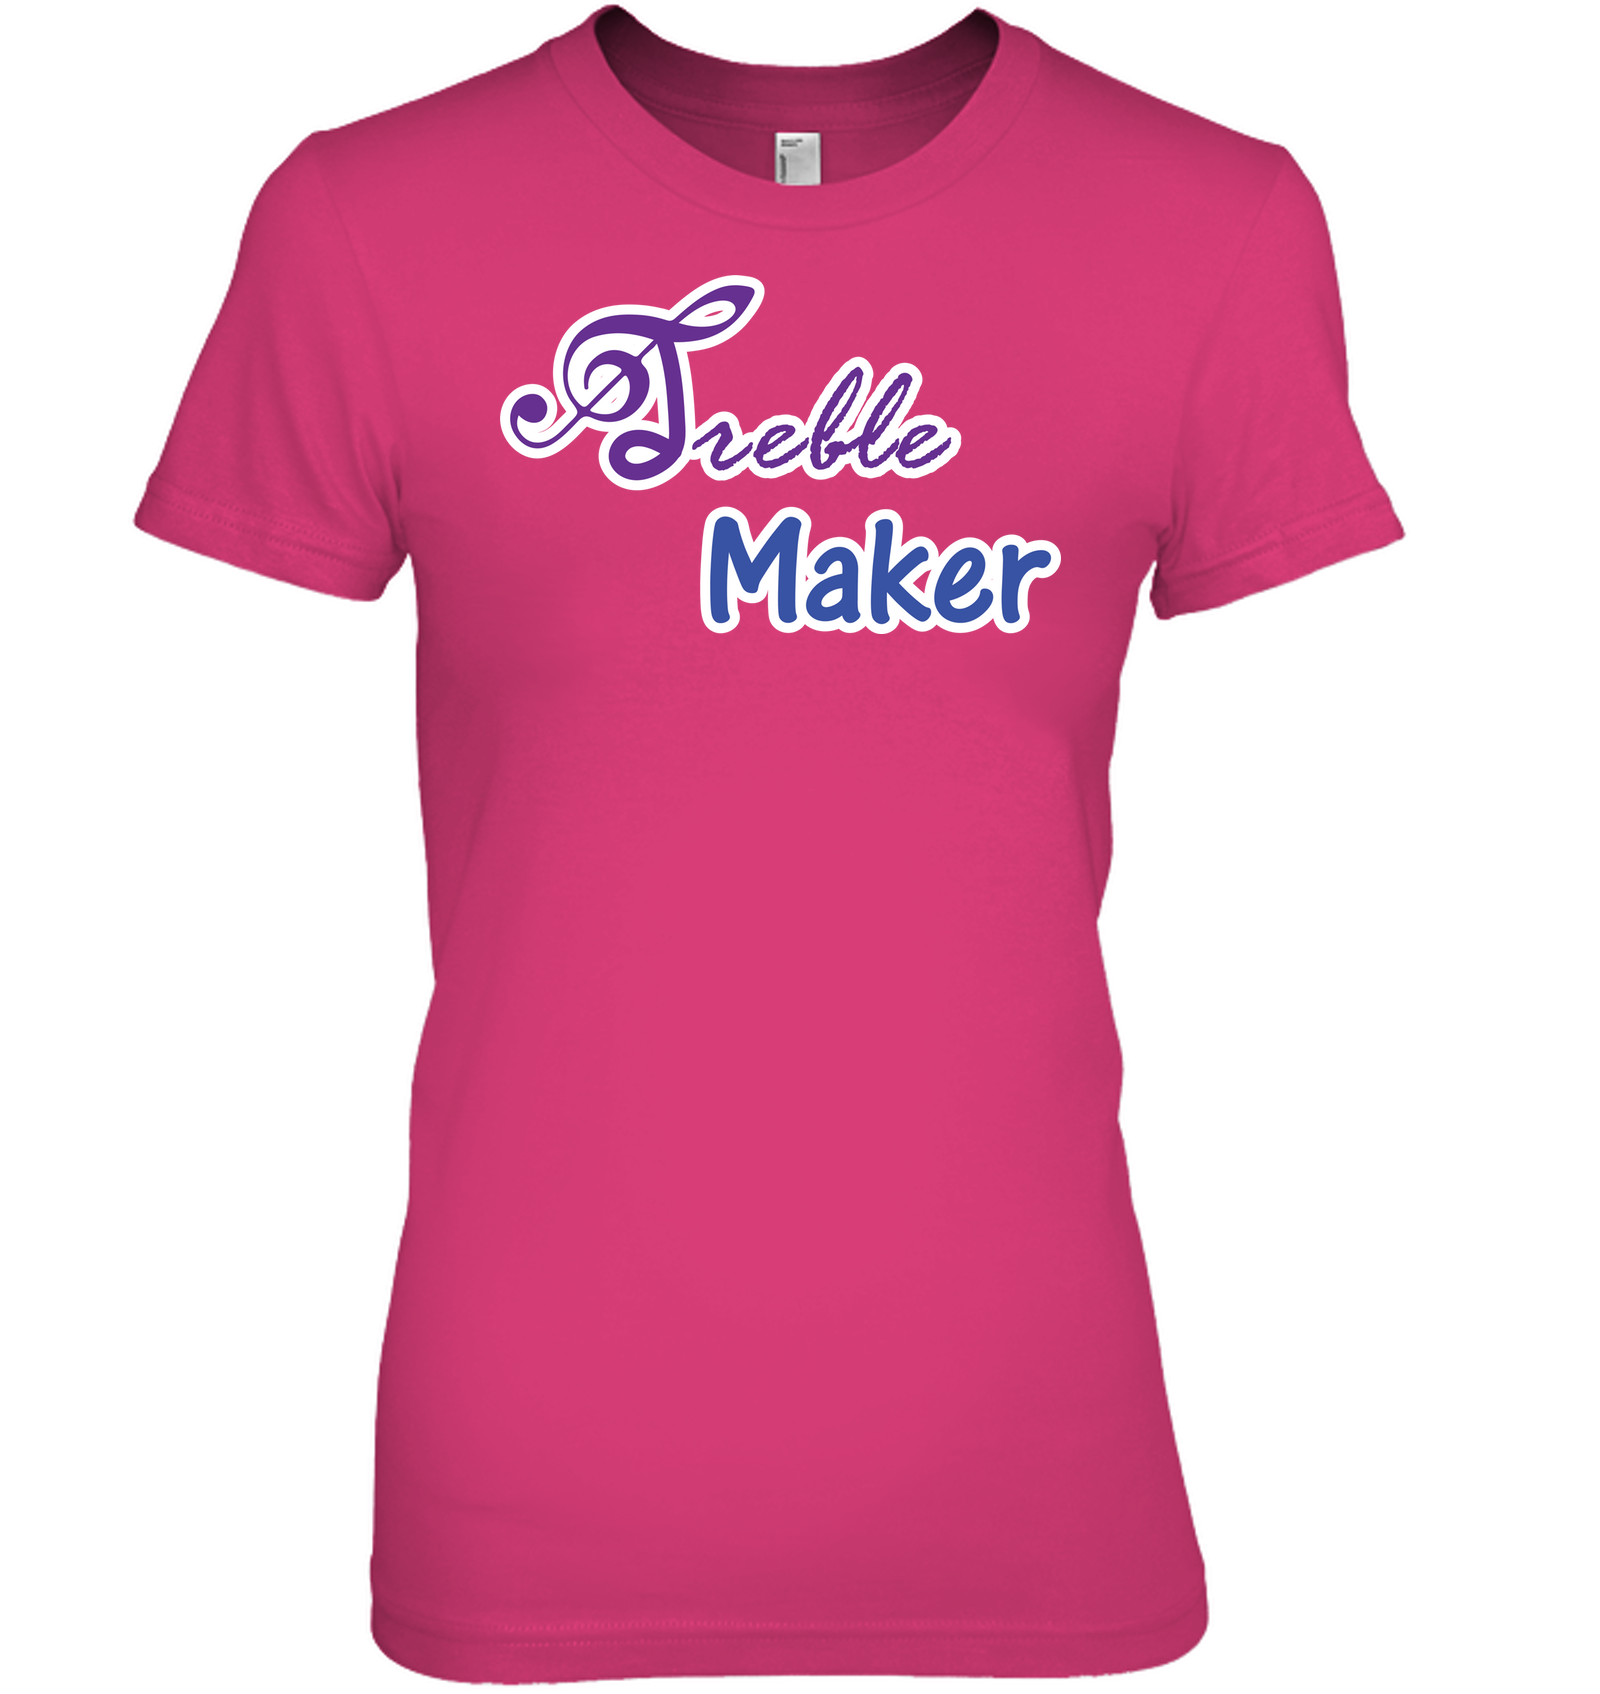 Treble Maker plain and simple - Hanes Women's Nano-T® T-Shirt